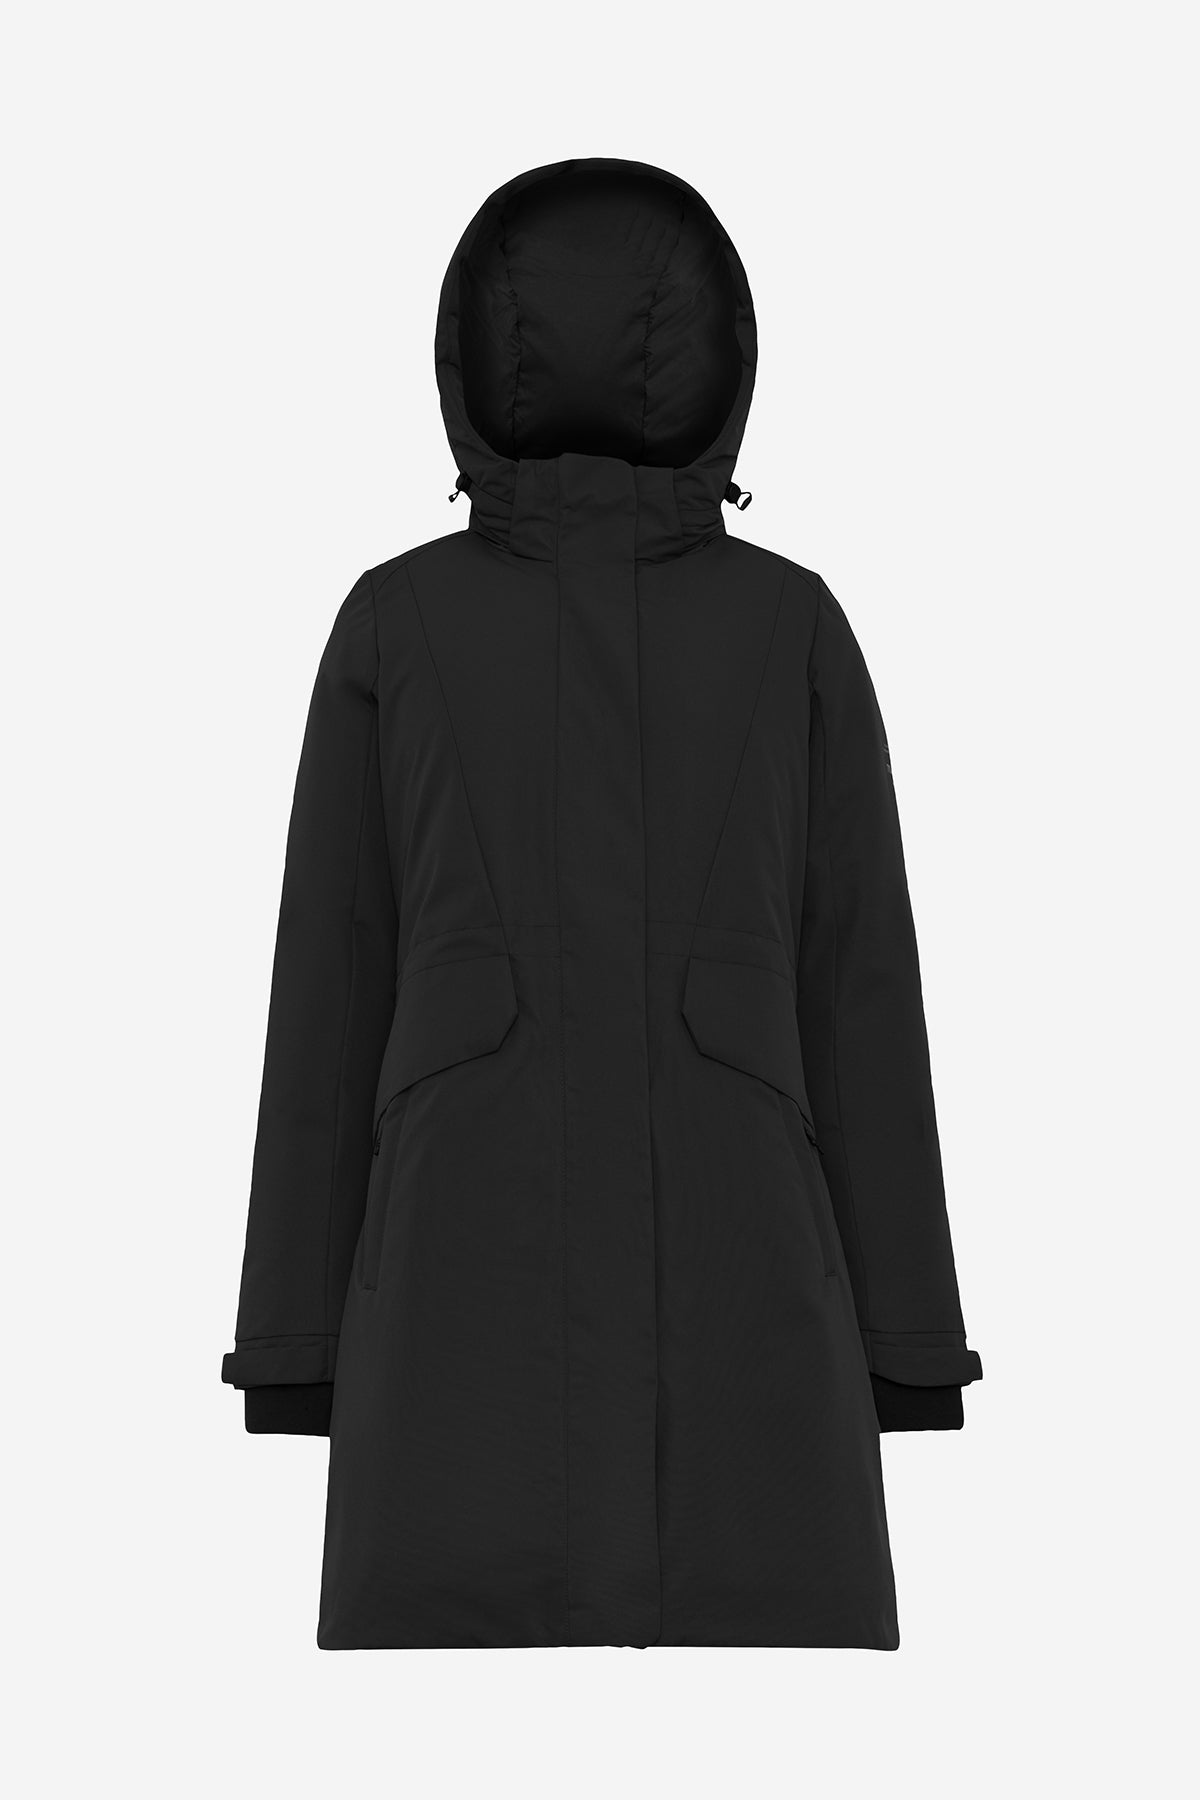 Kongur waterproof coat with a hood for the rain | ECOALF